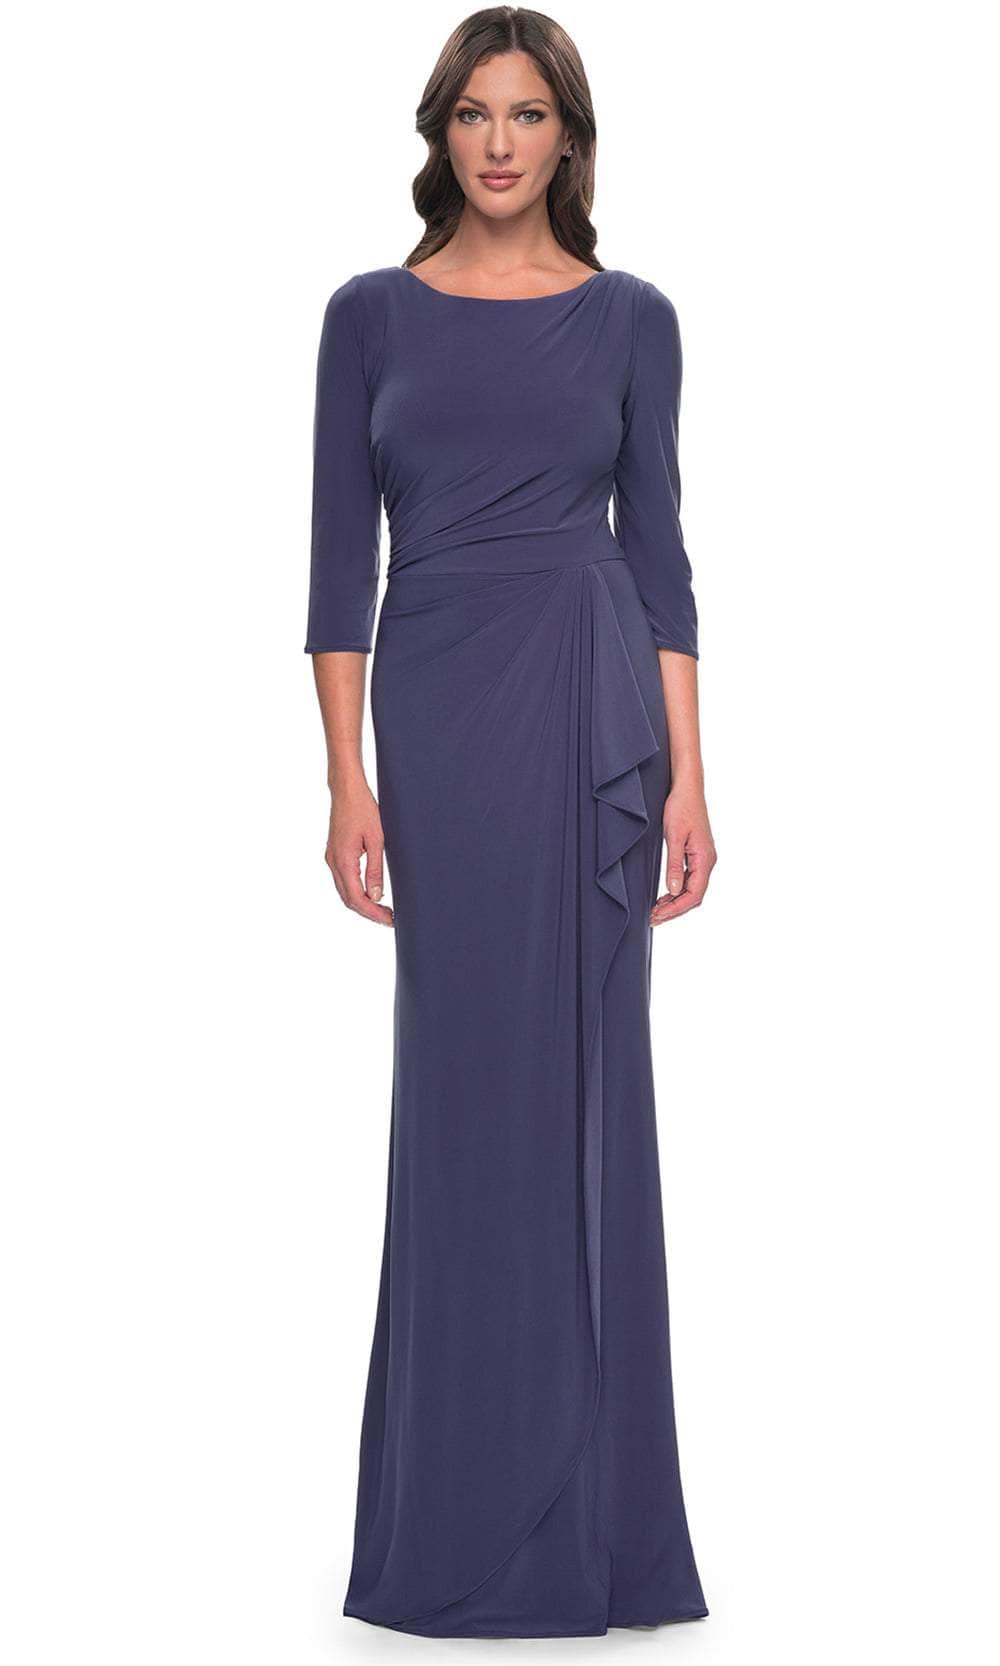 Image of La Femme 30814 - Bateau Neck Jersey Evening Dress